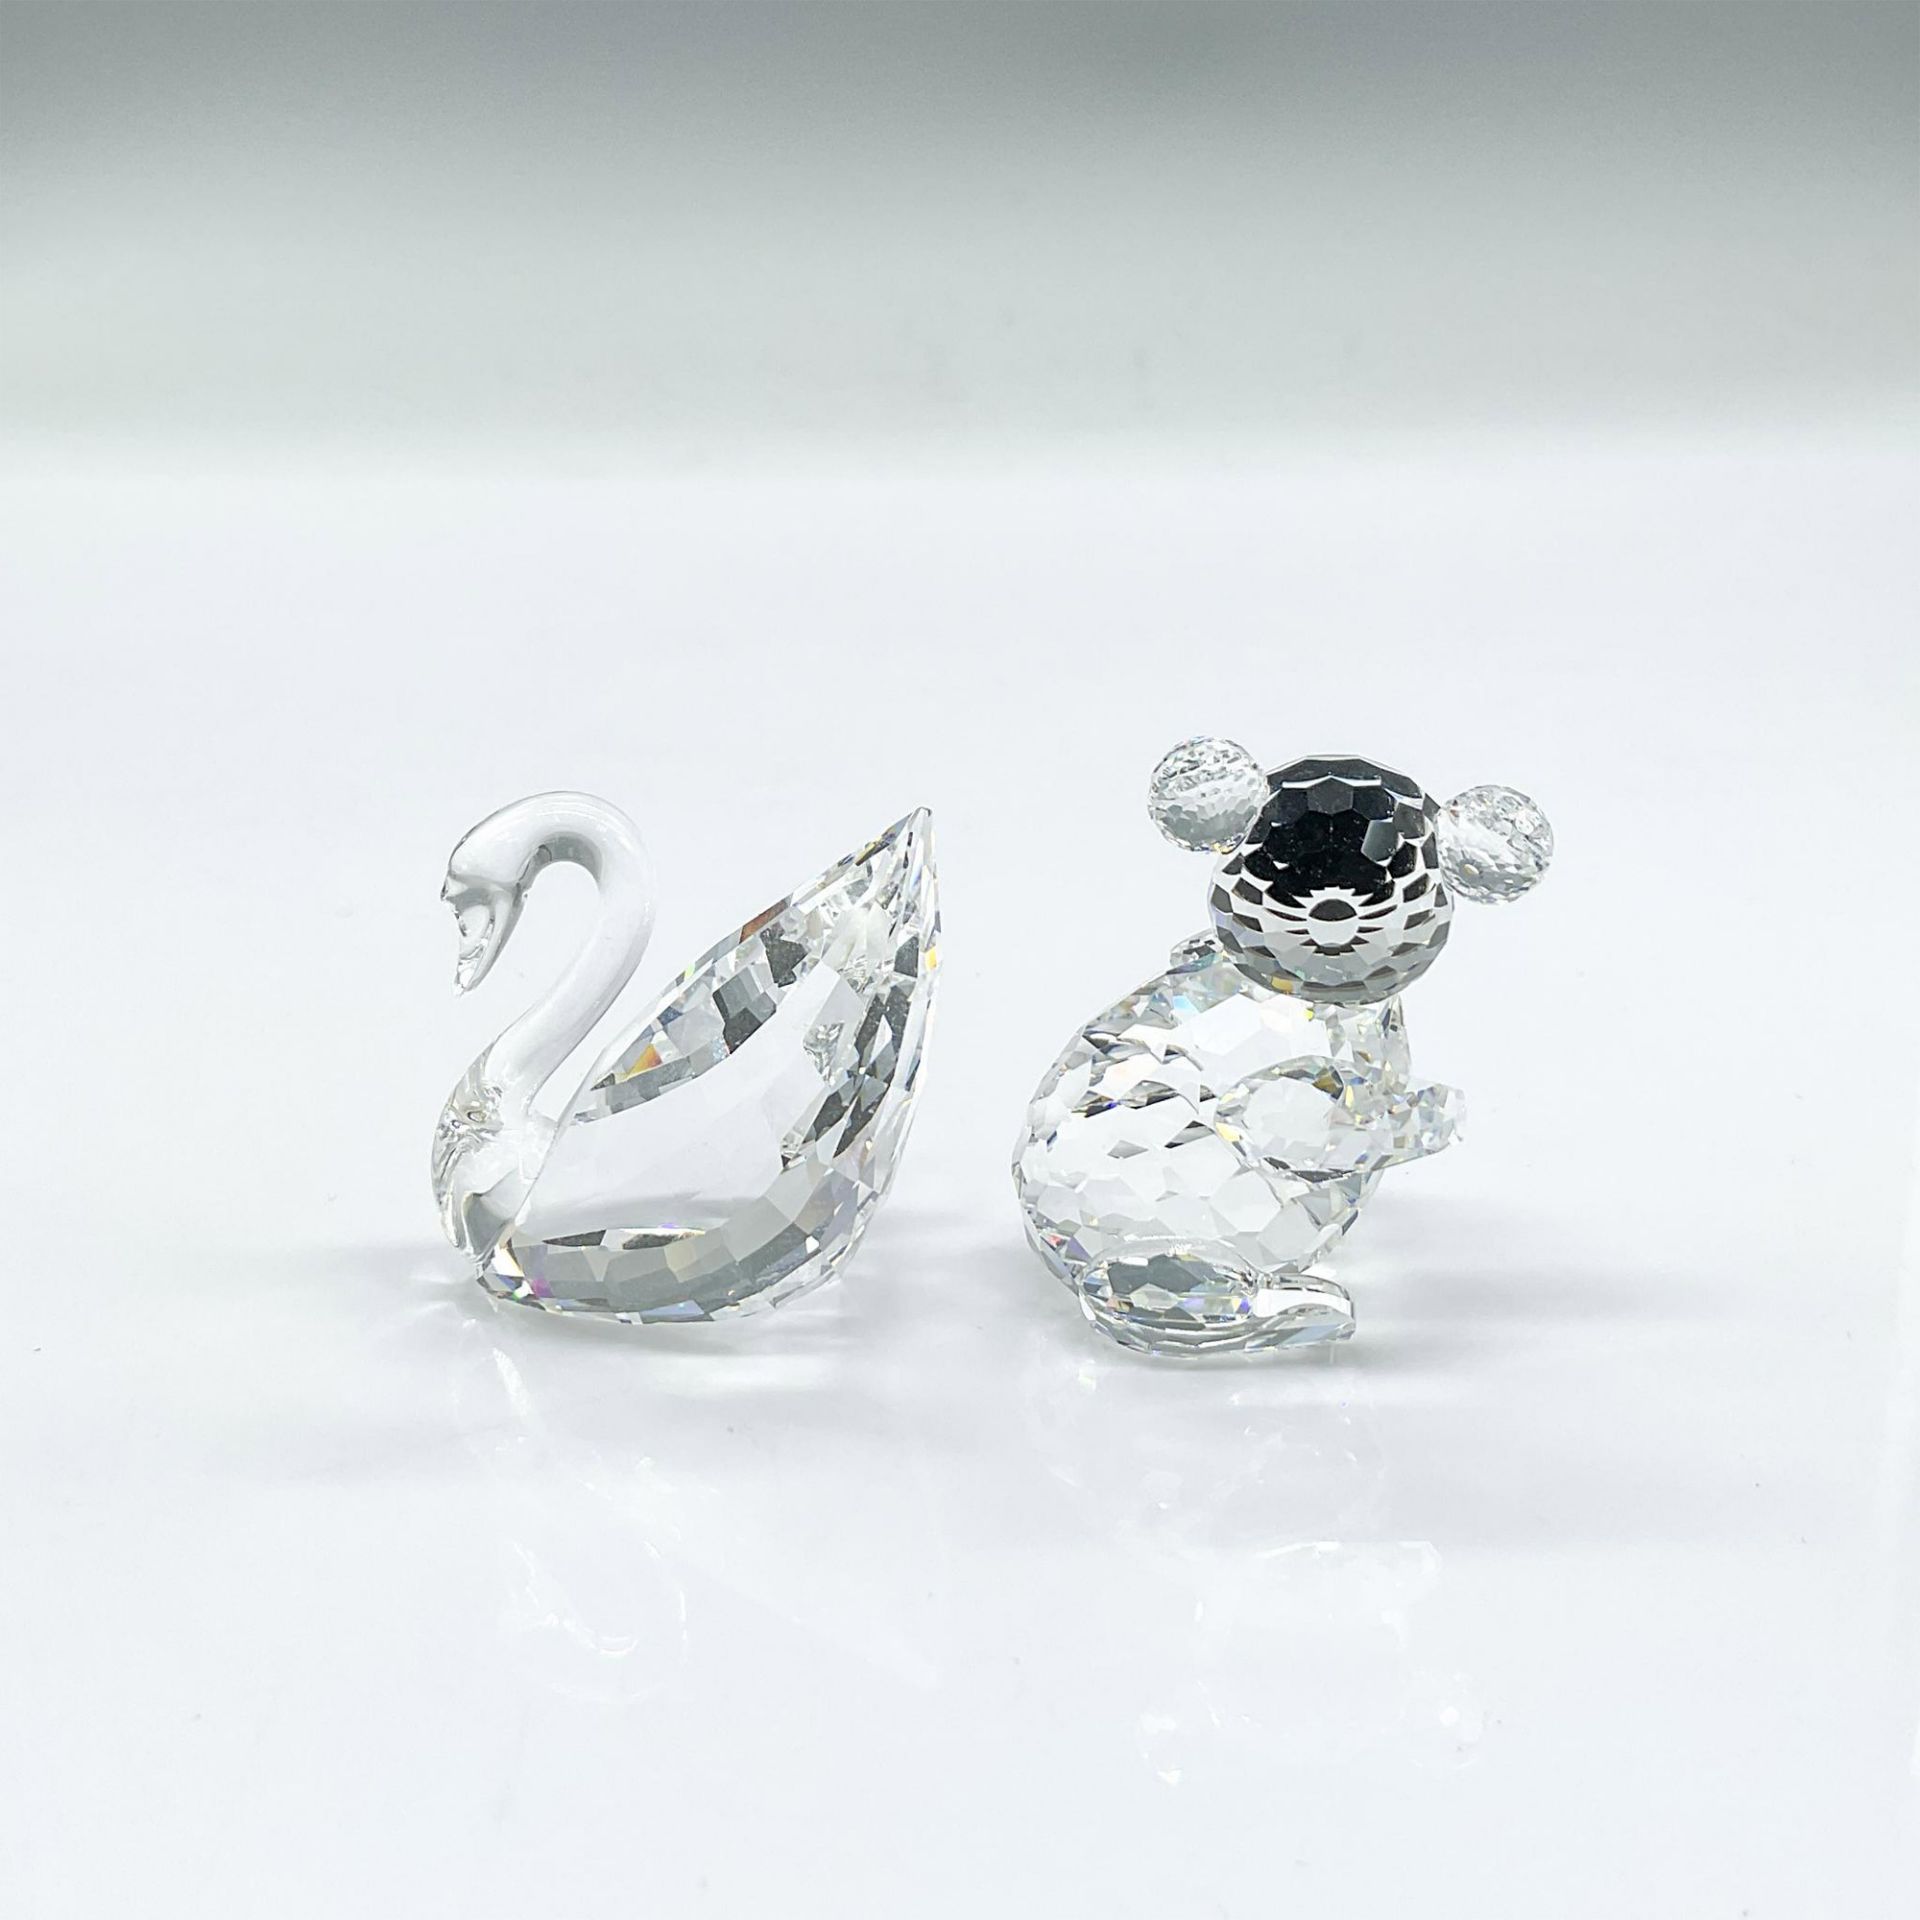 2pc Swarovski Silver Crystal Figurines, Koala and Swan - Image 2 of 3